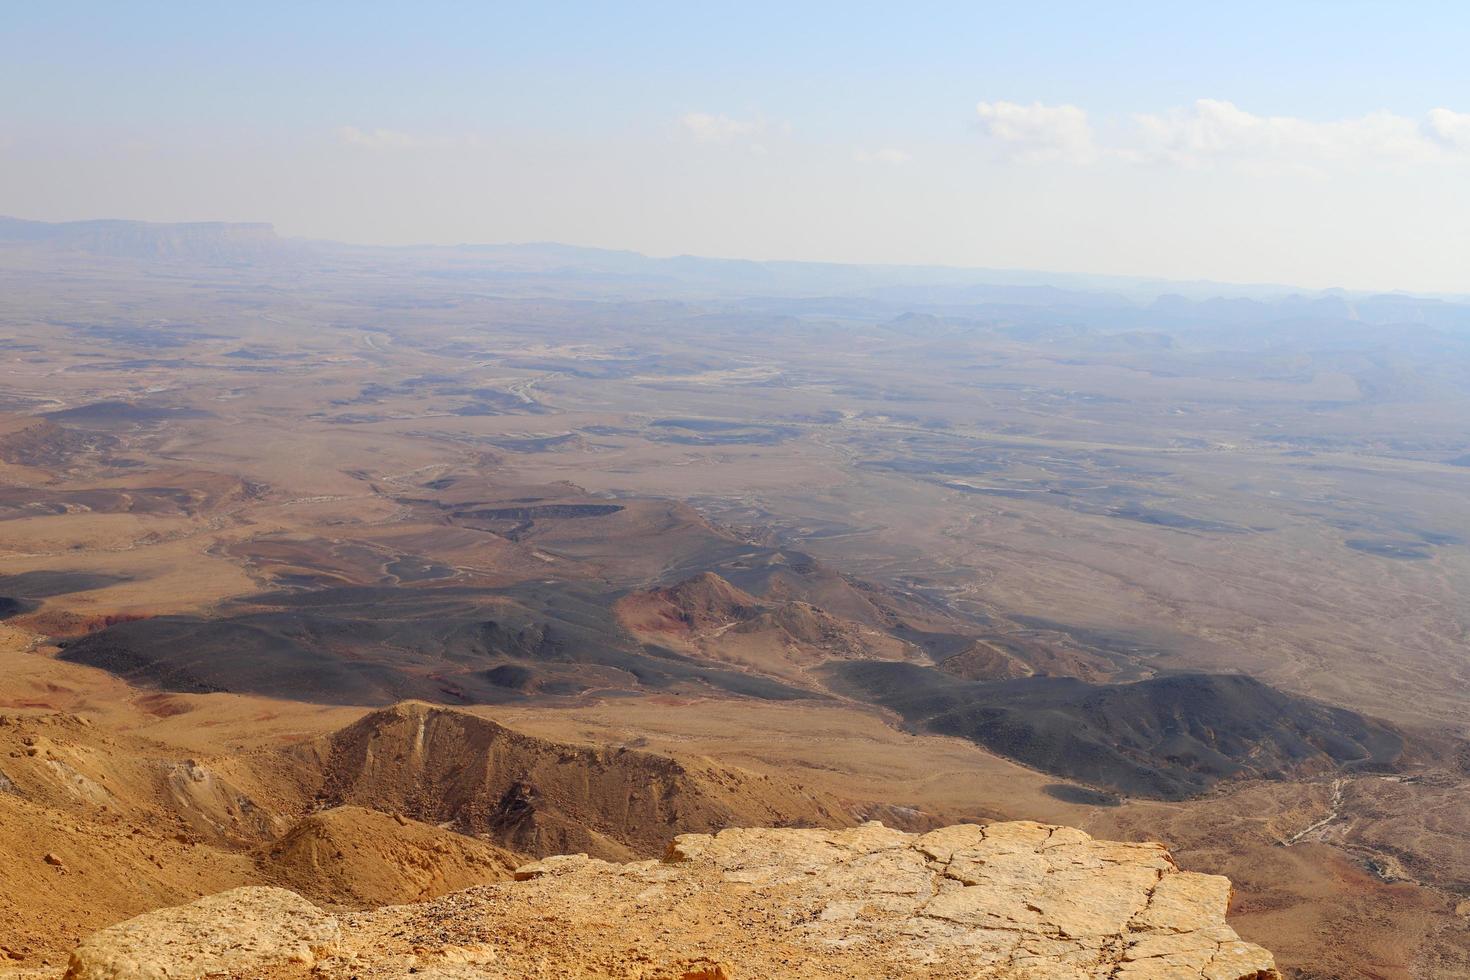 mitzpe ramon israel 1 de novembro de 2019. a cratera ramon é uma cratera de erosão no deserto de negev, no sul de israel. foto